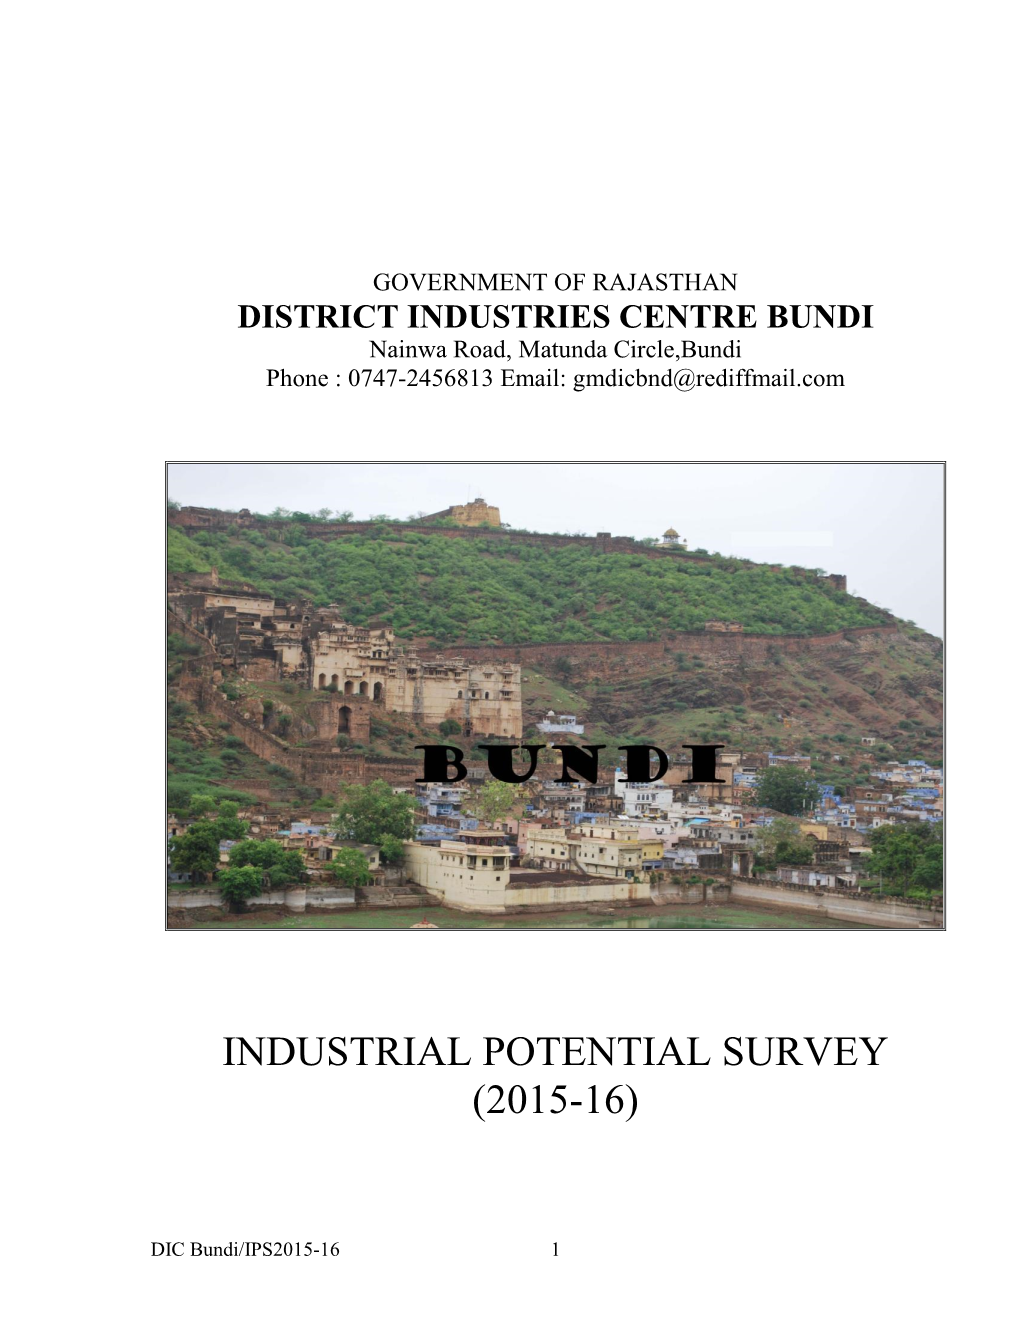 Industrial Potential Survey (2015-16)